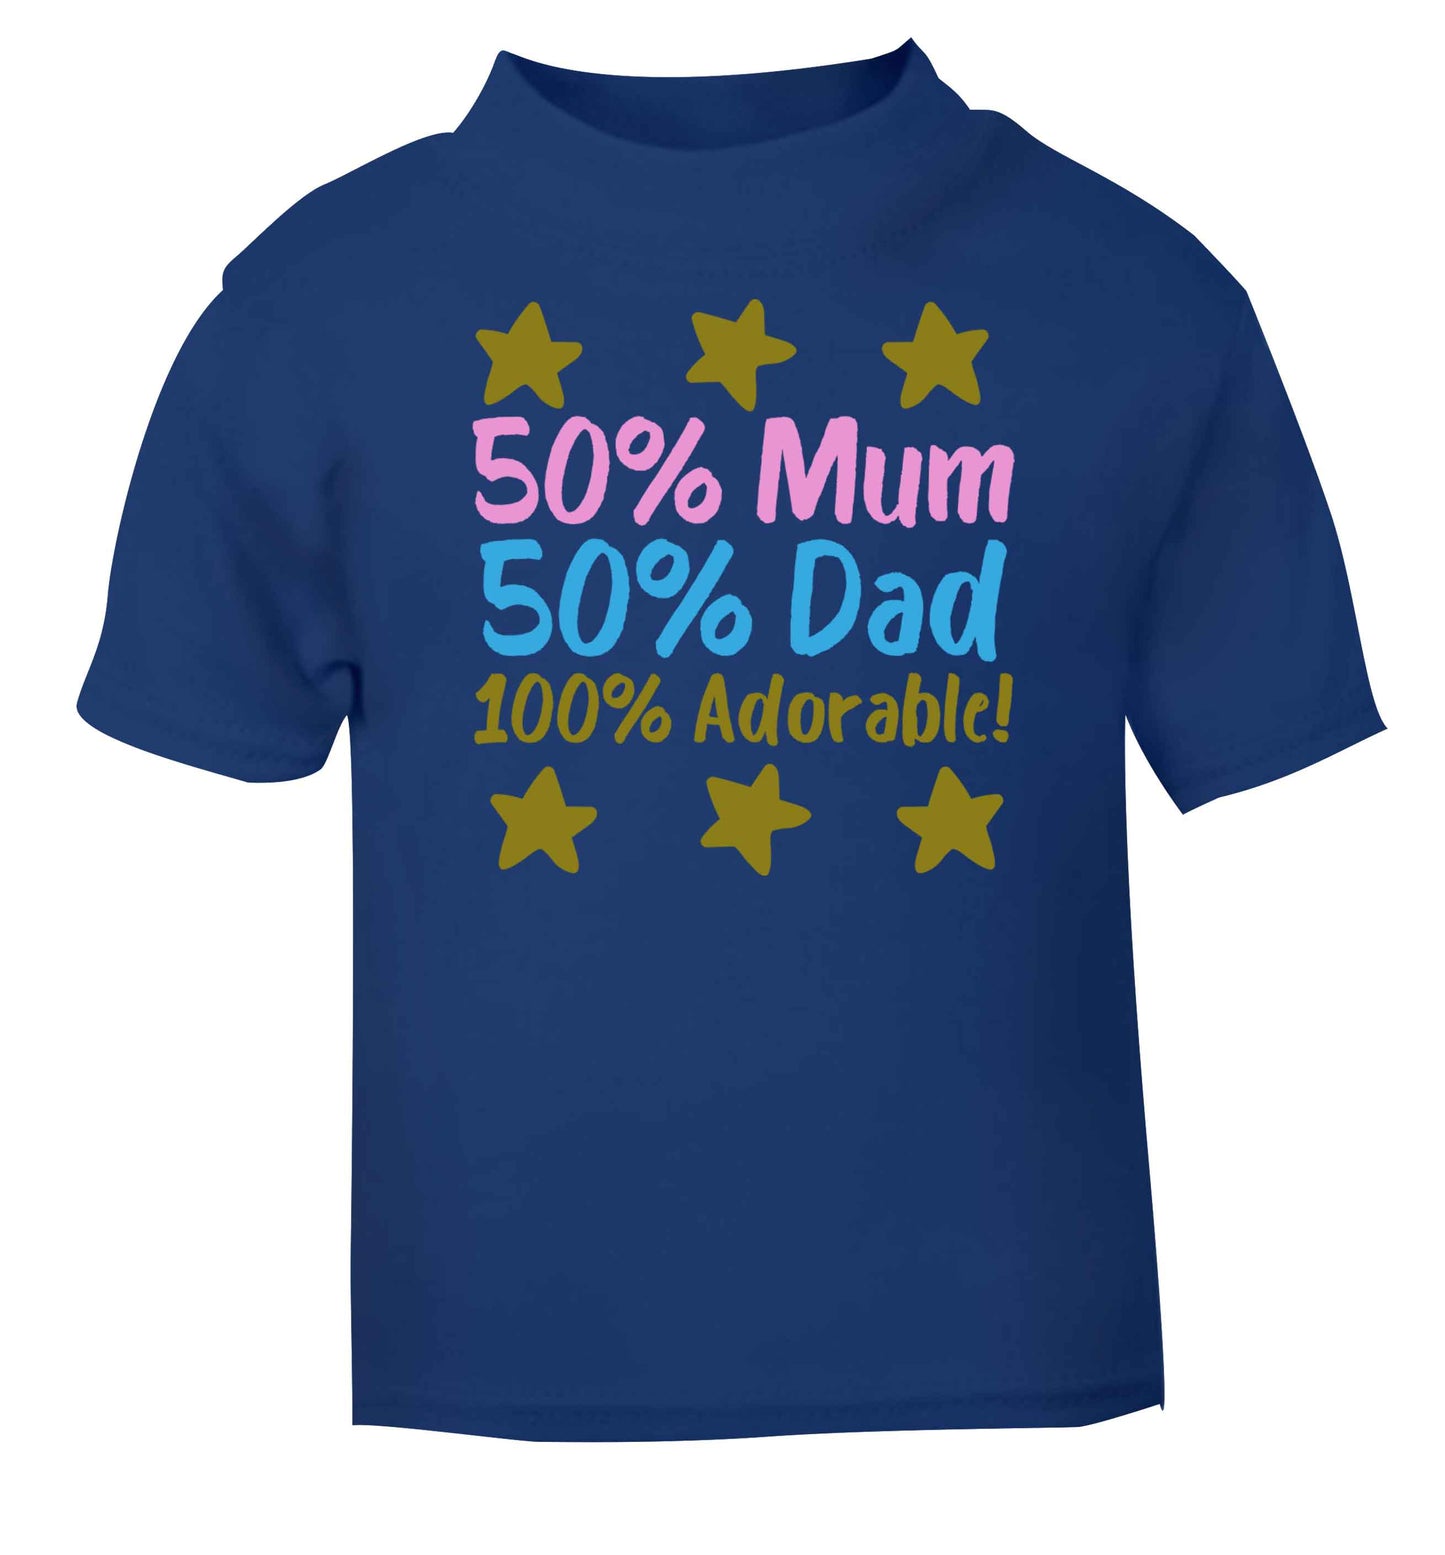 50% mum 50% dad 100% adorable blue baby toddler Tshirt 2 Years